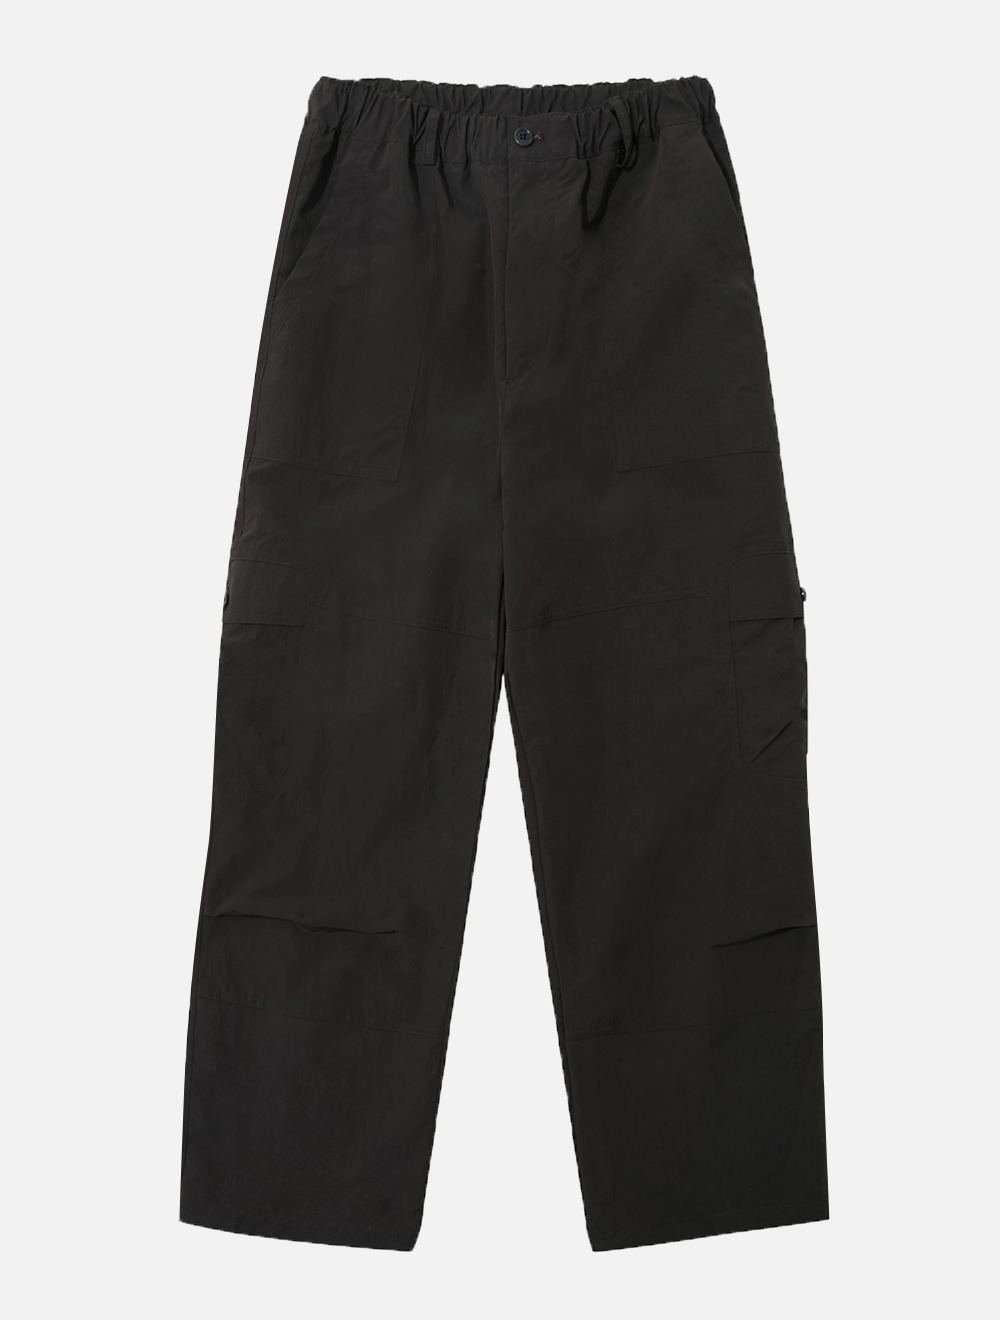 round cargo pants (deep brown)